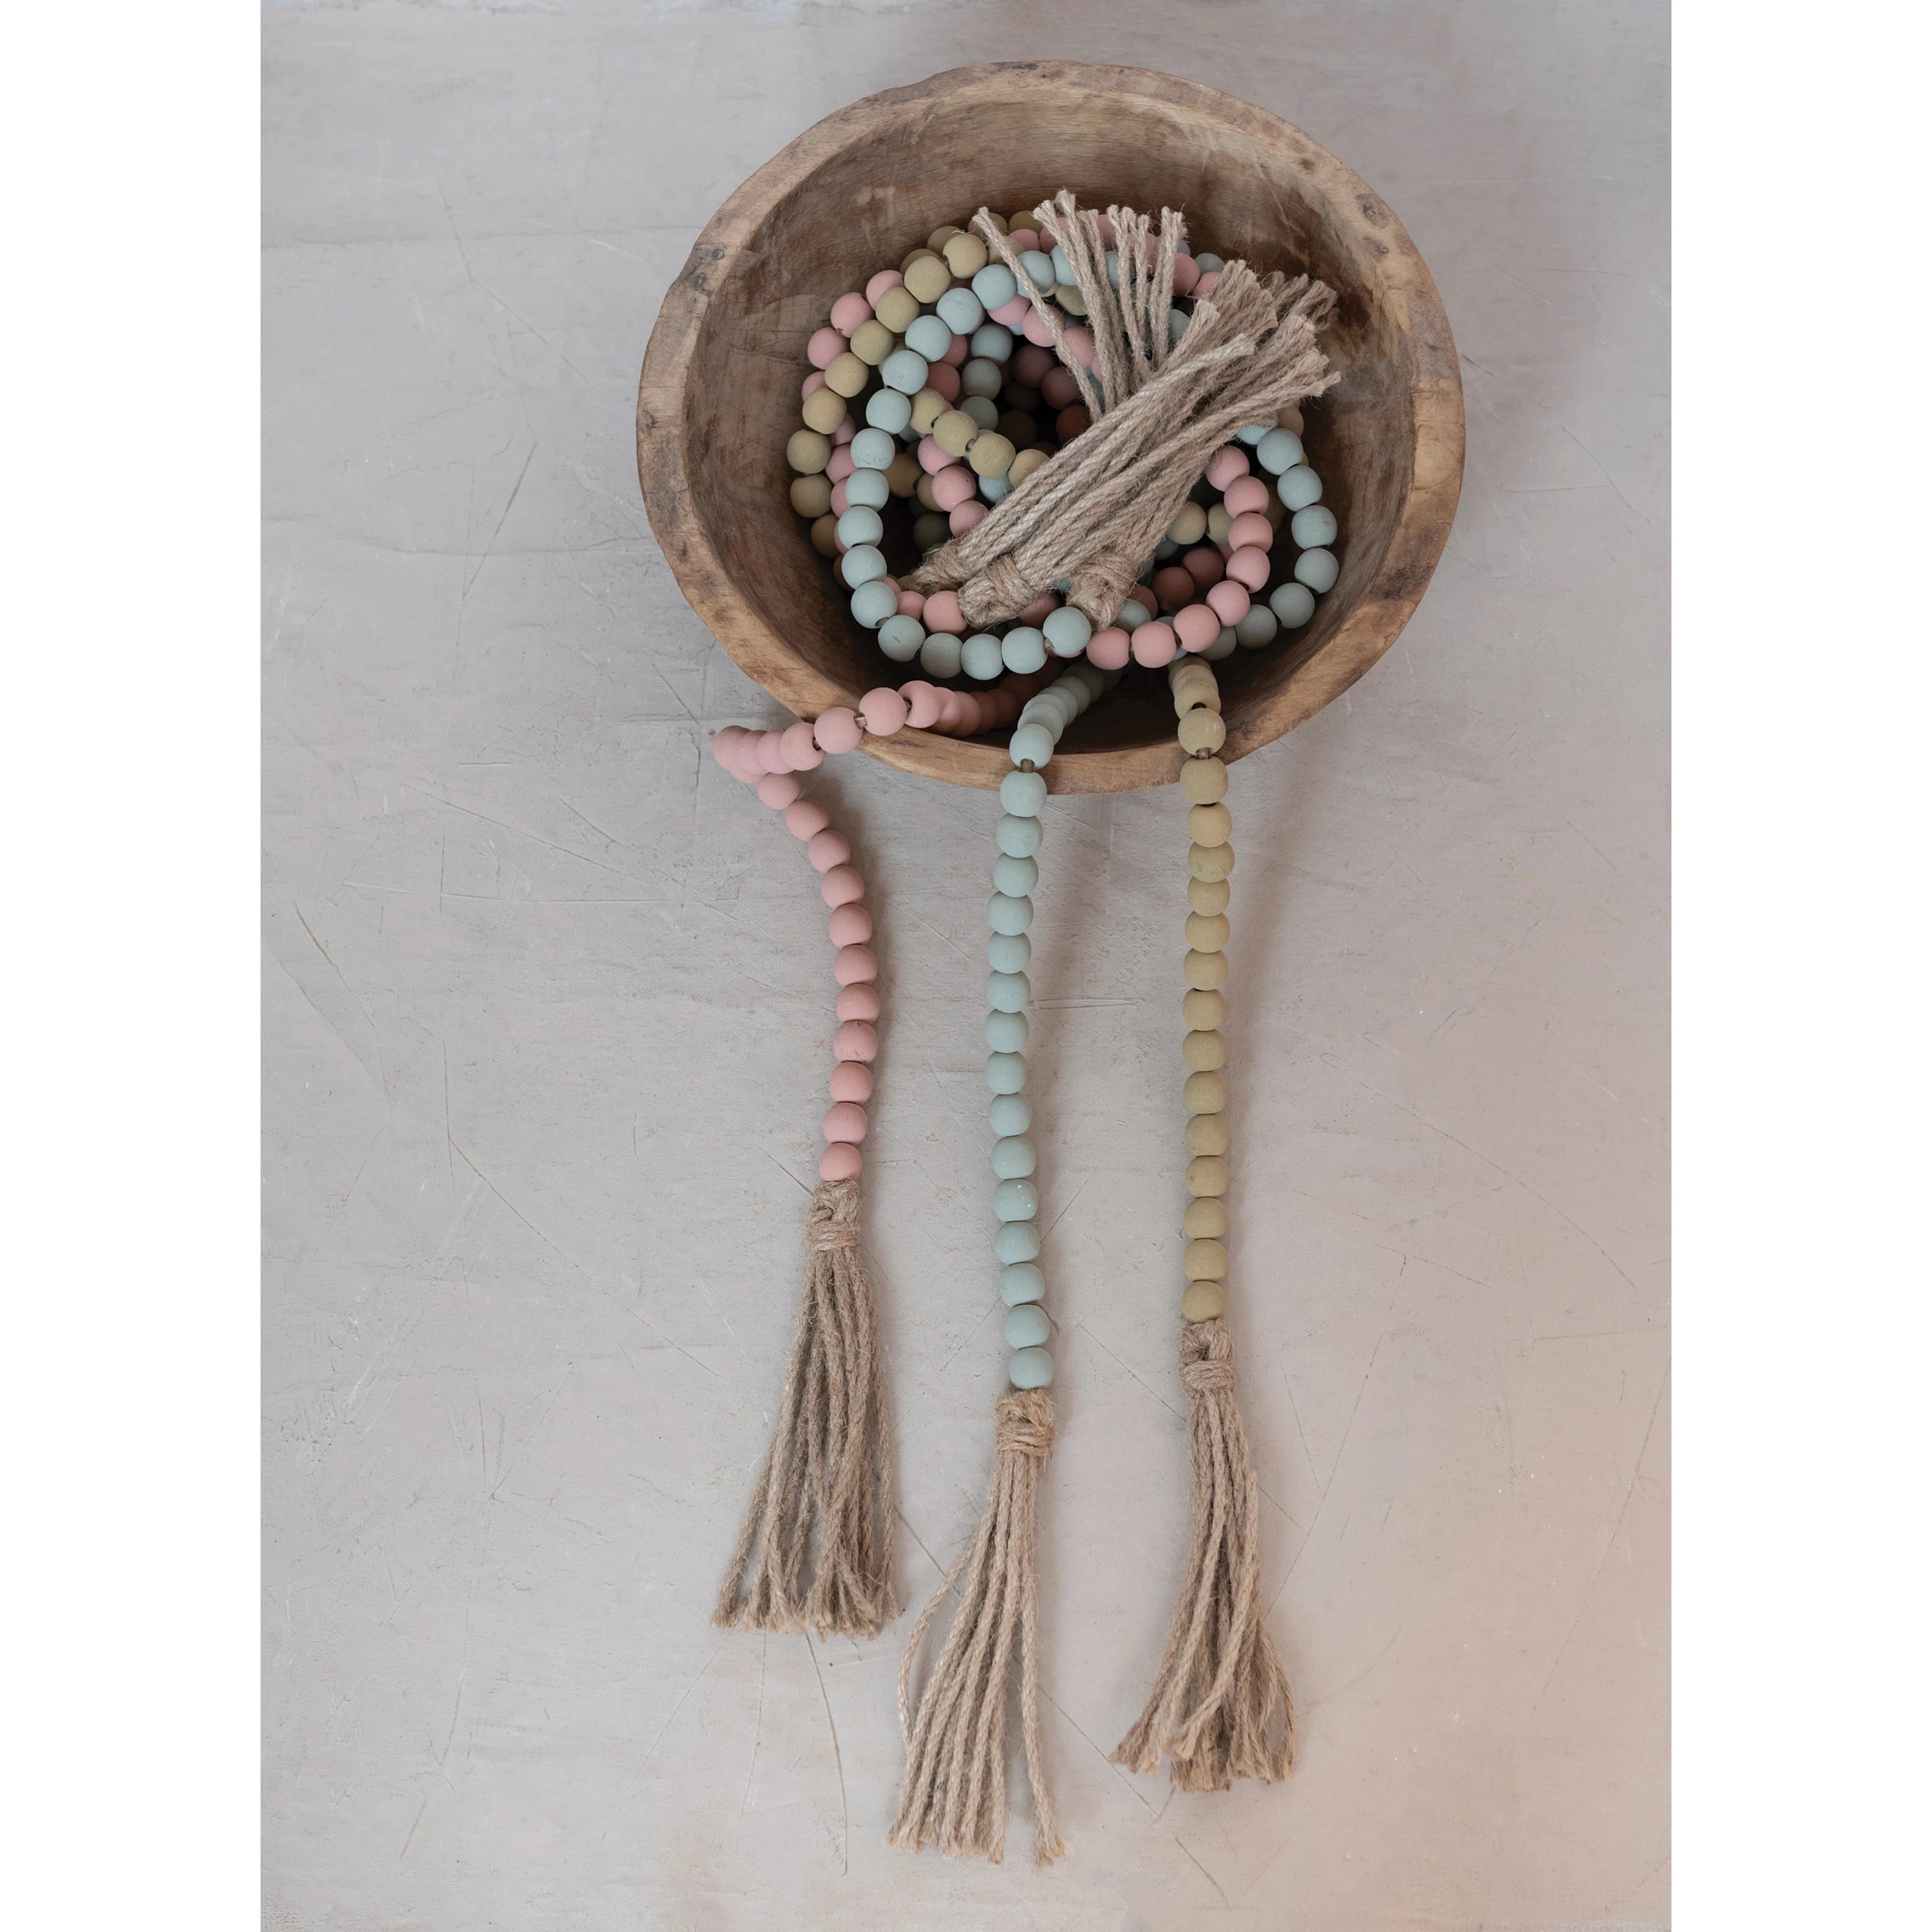 Paulownia Wood Bead with Jute Tassels, 3 Colors